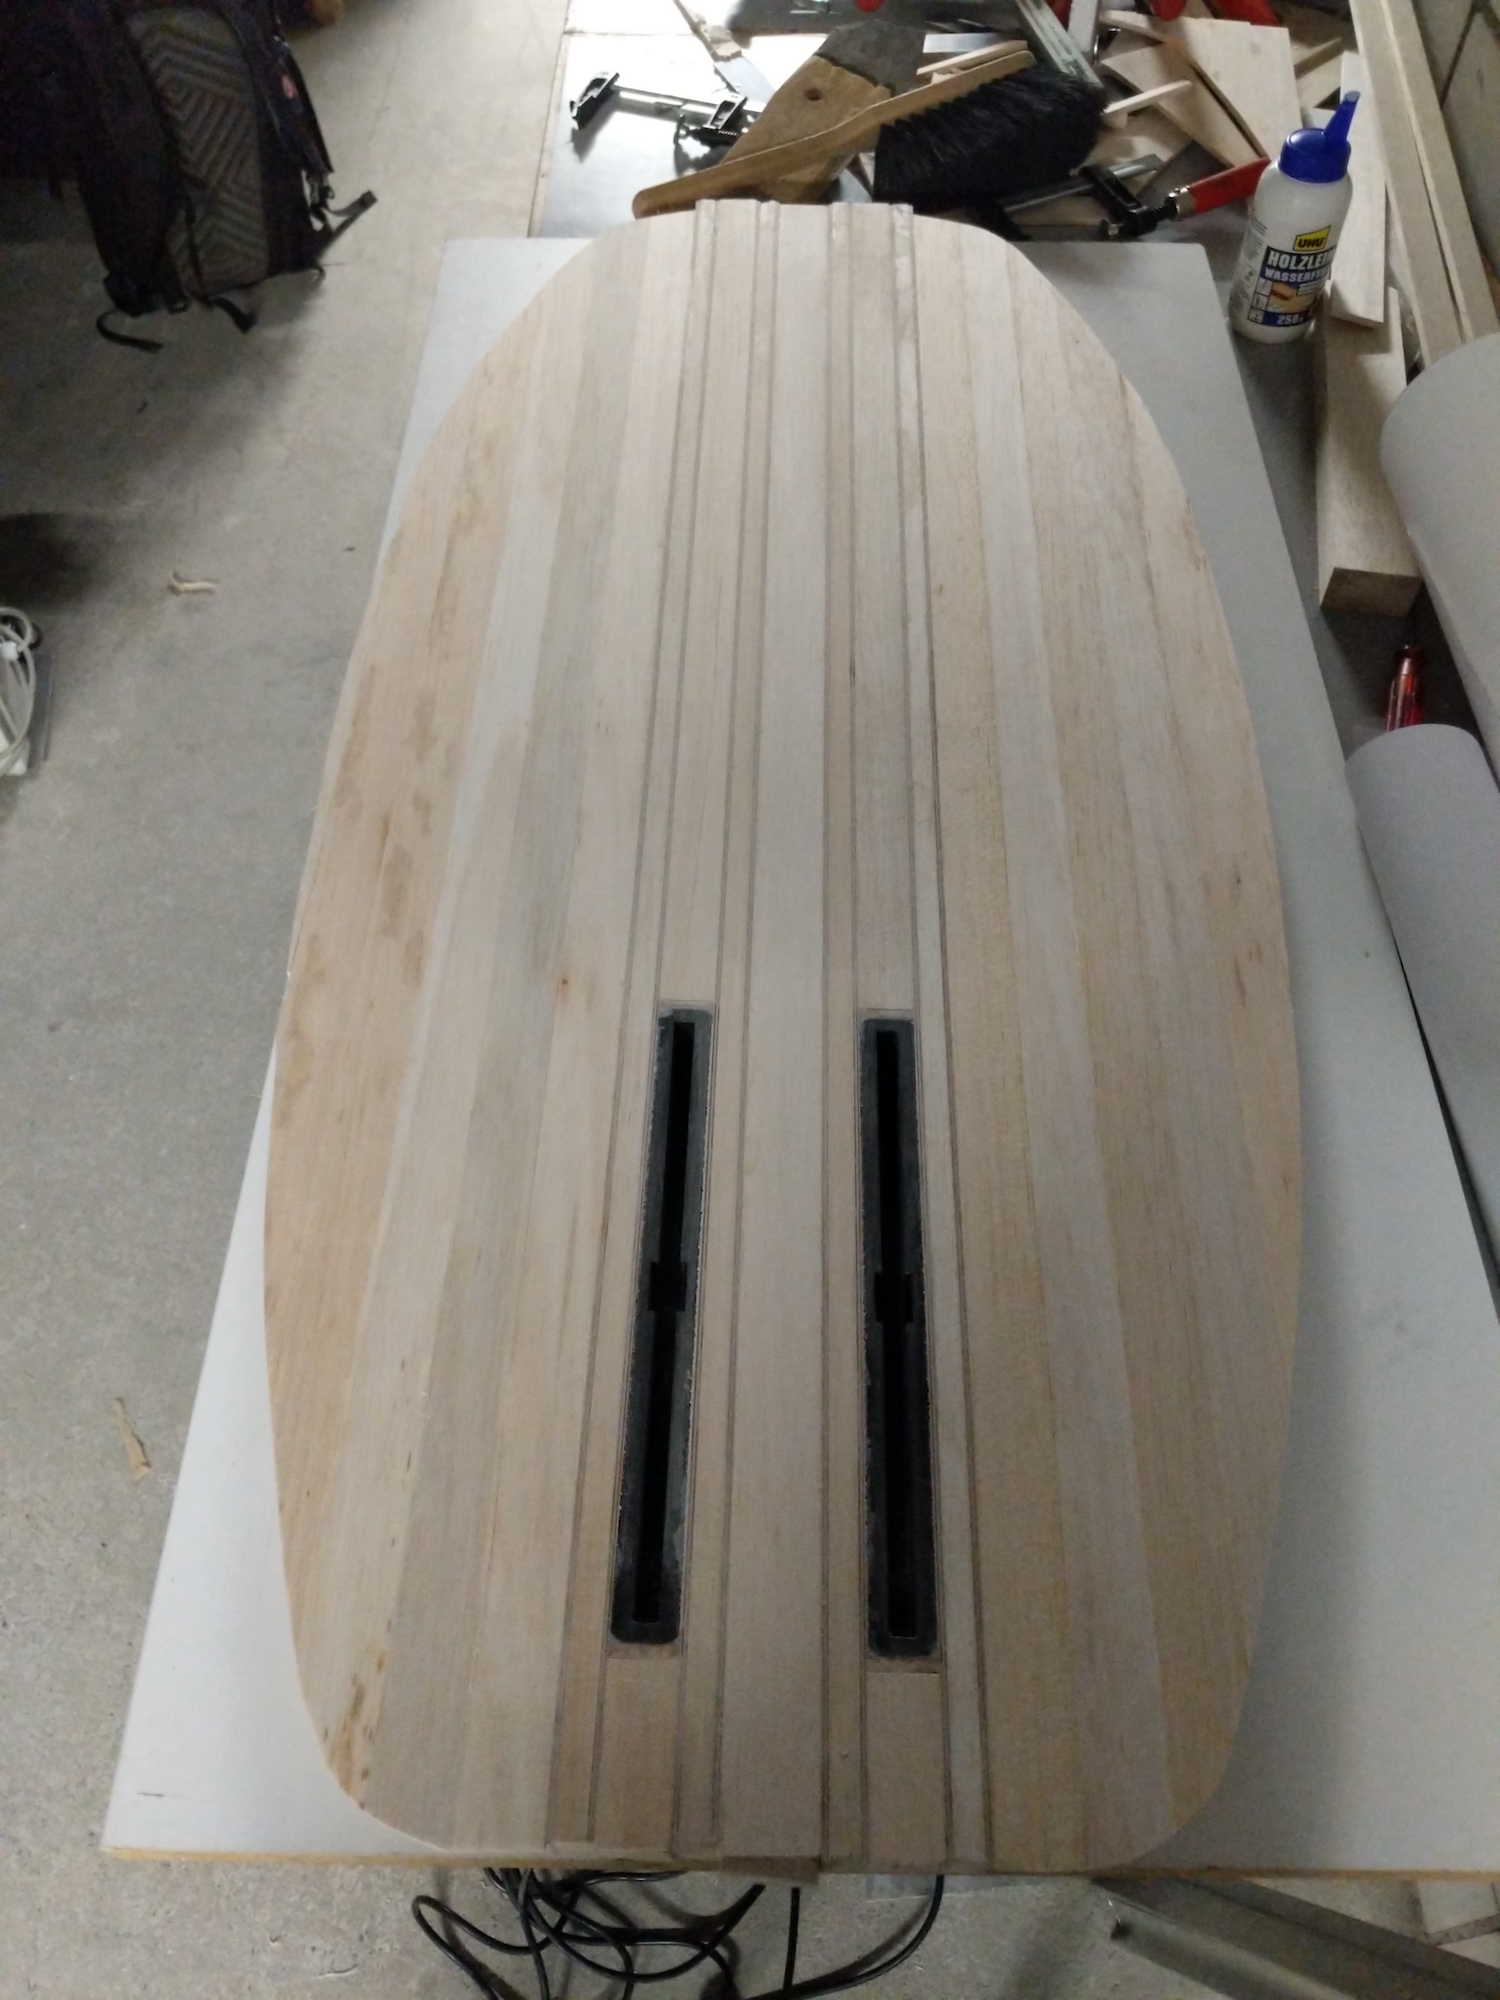 Stringers and deck start looking like a surfboard (outside board)